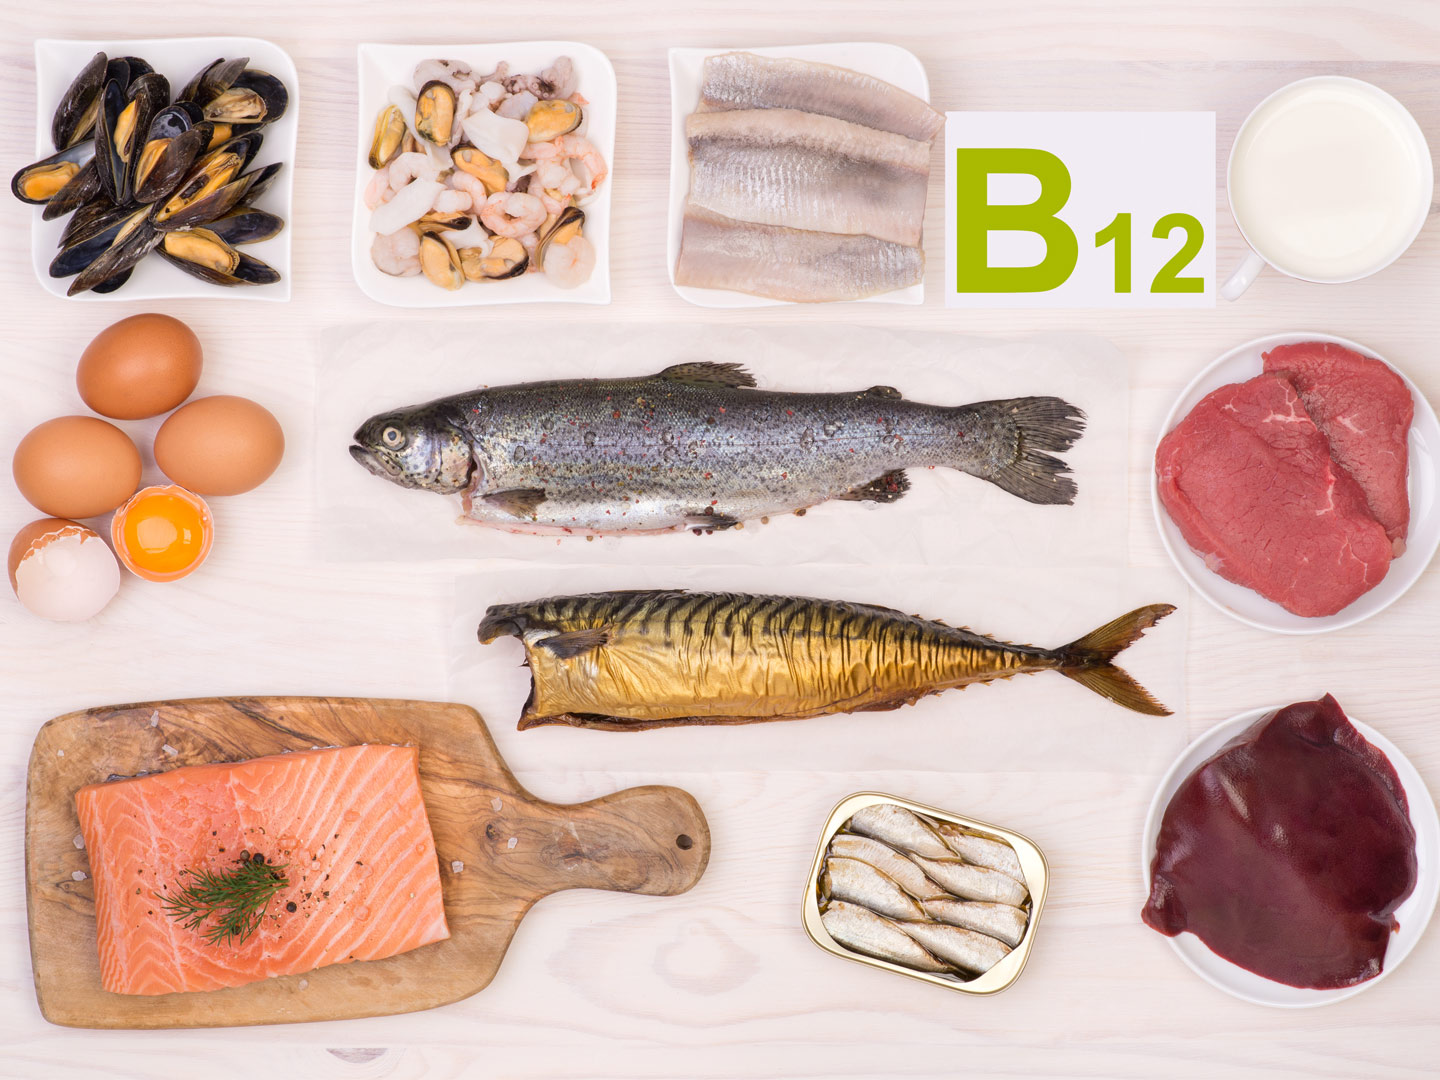 Aliments amb vitamina b12